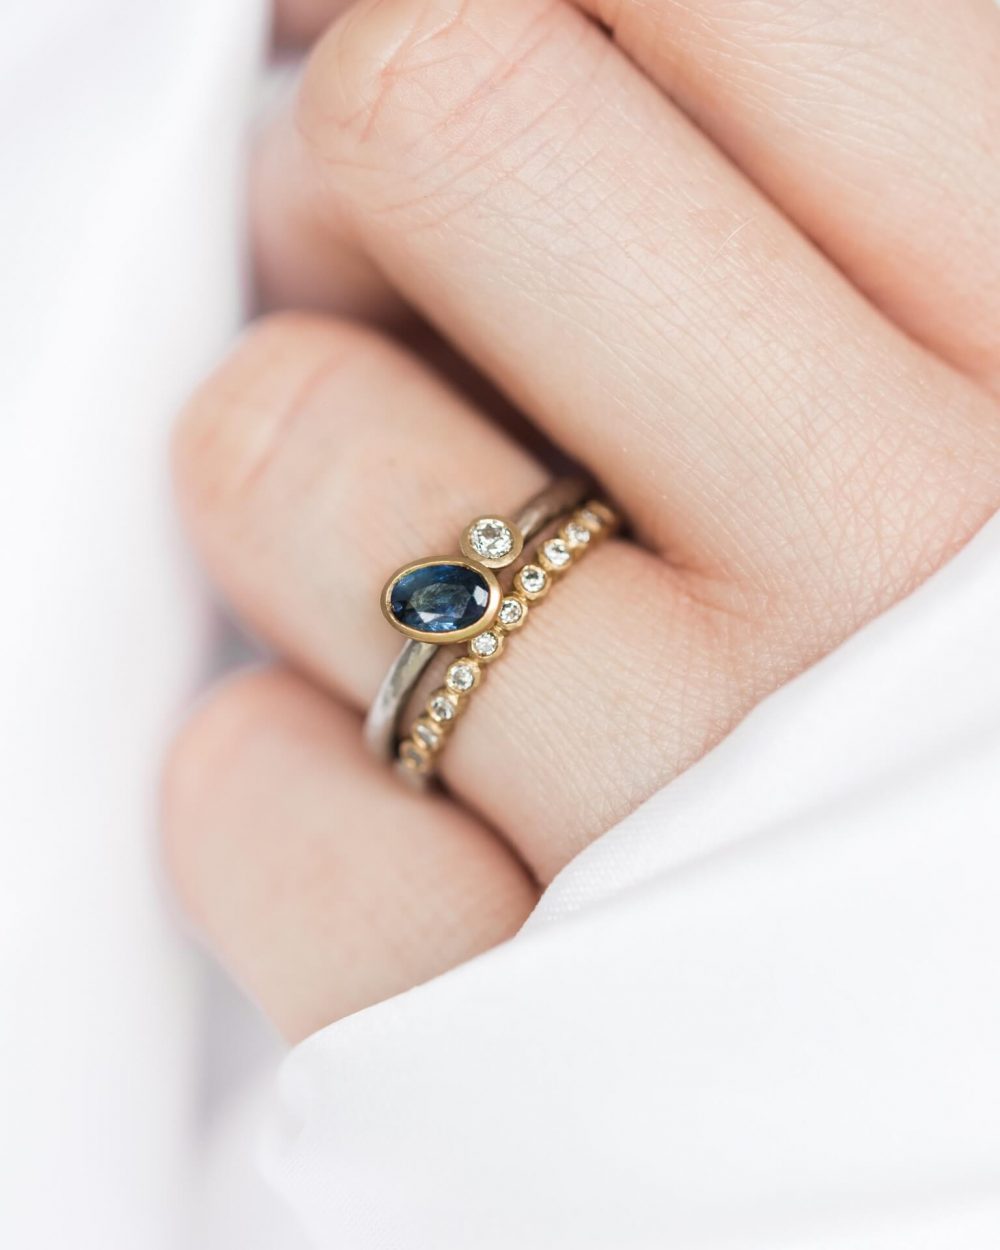 Oval Sapphire And Diamond Contemporary Engagement Ring. Handmade By British Jewellery Designer Jacks Turner.